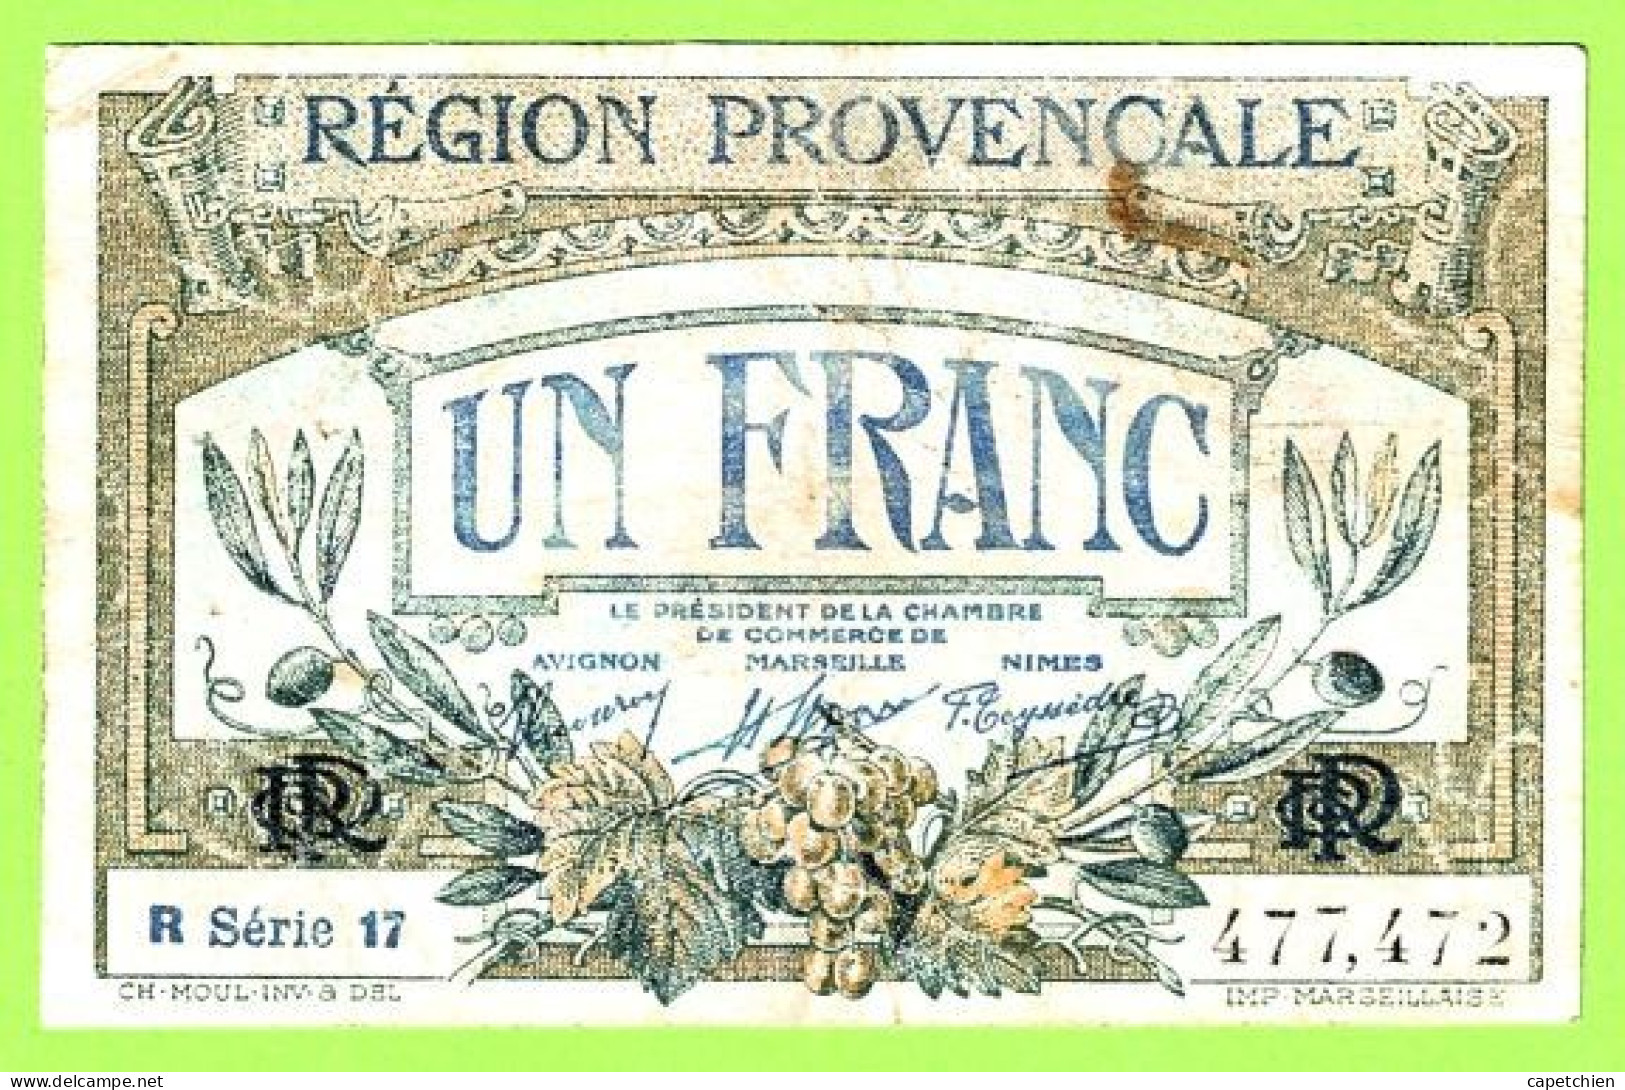 FRANCE / CHAMBRE De COMMERCE / REGION PROVENCALE / 1 FRANC / N° 477472 / R  SERIE 17 - Handelskammer